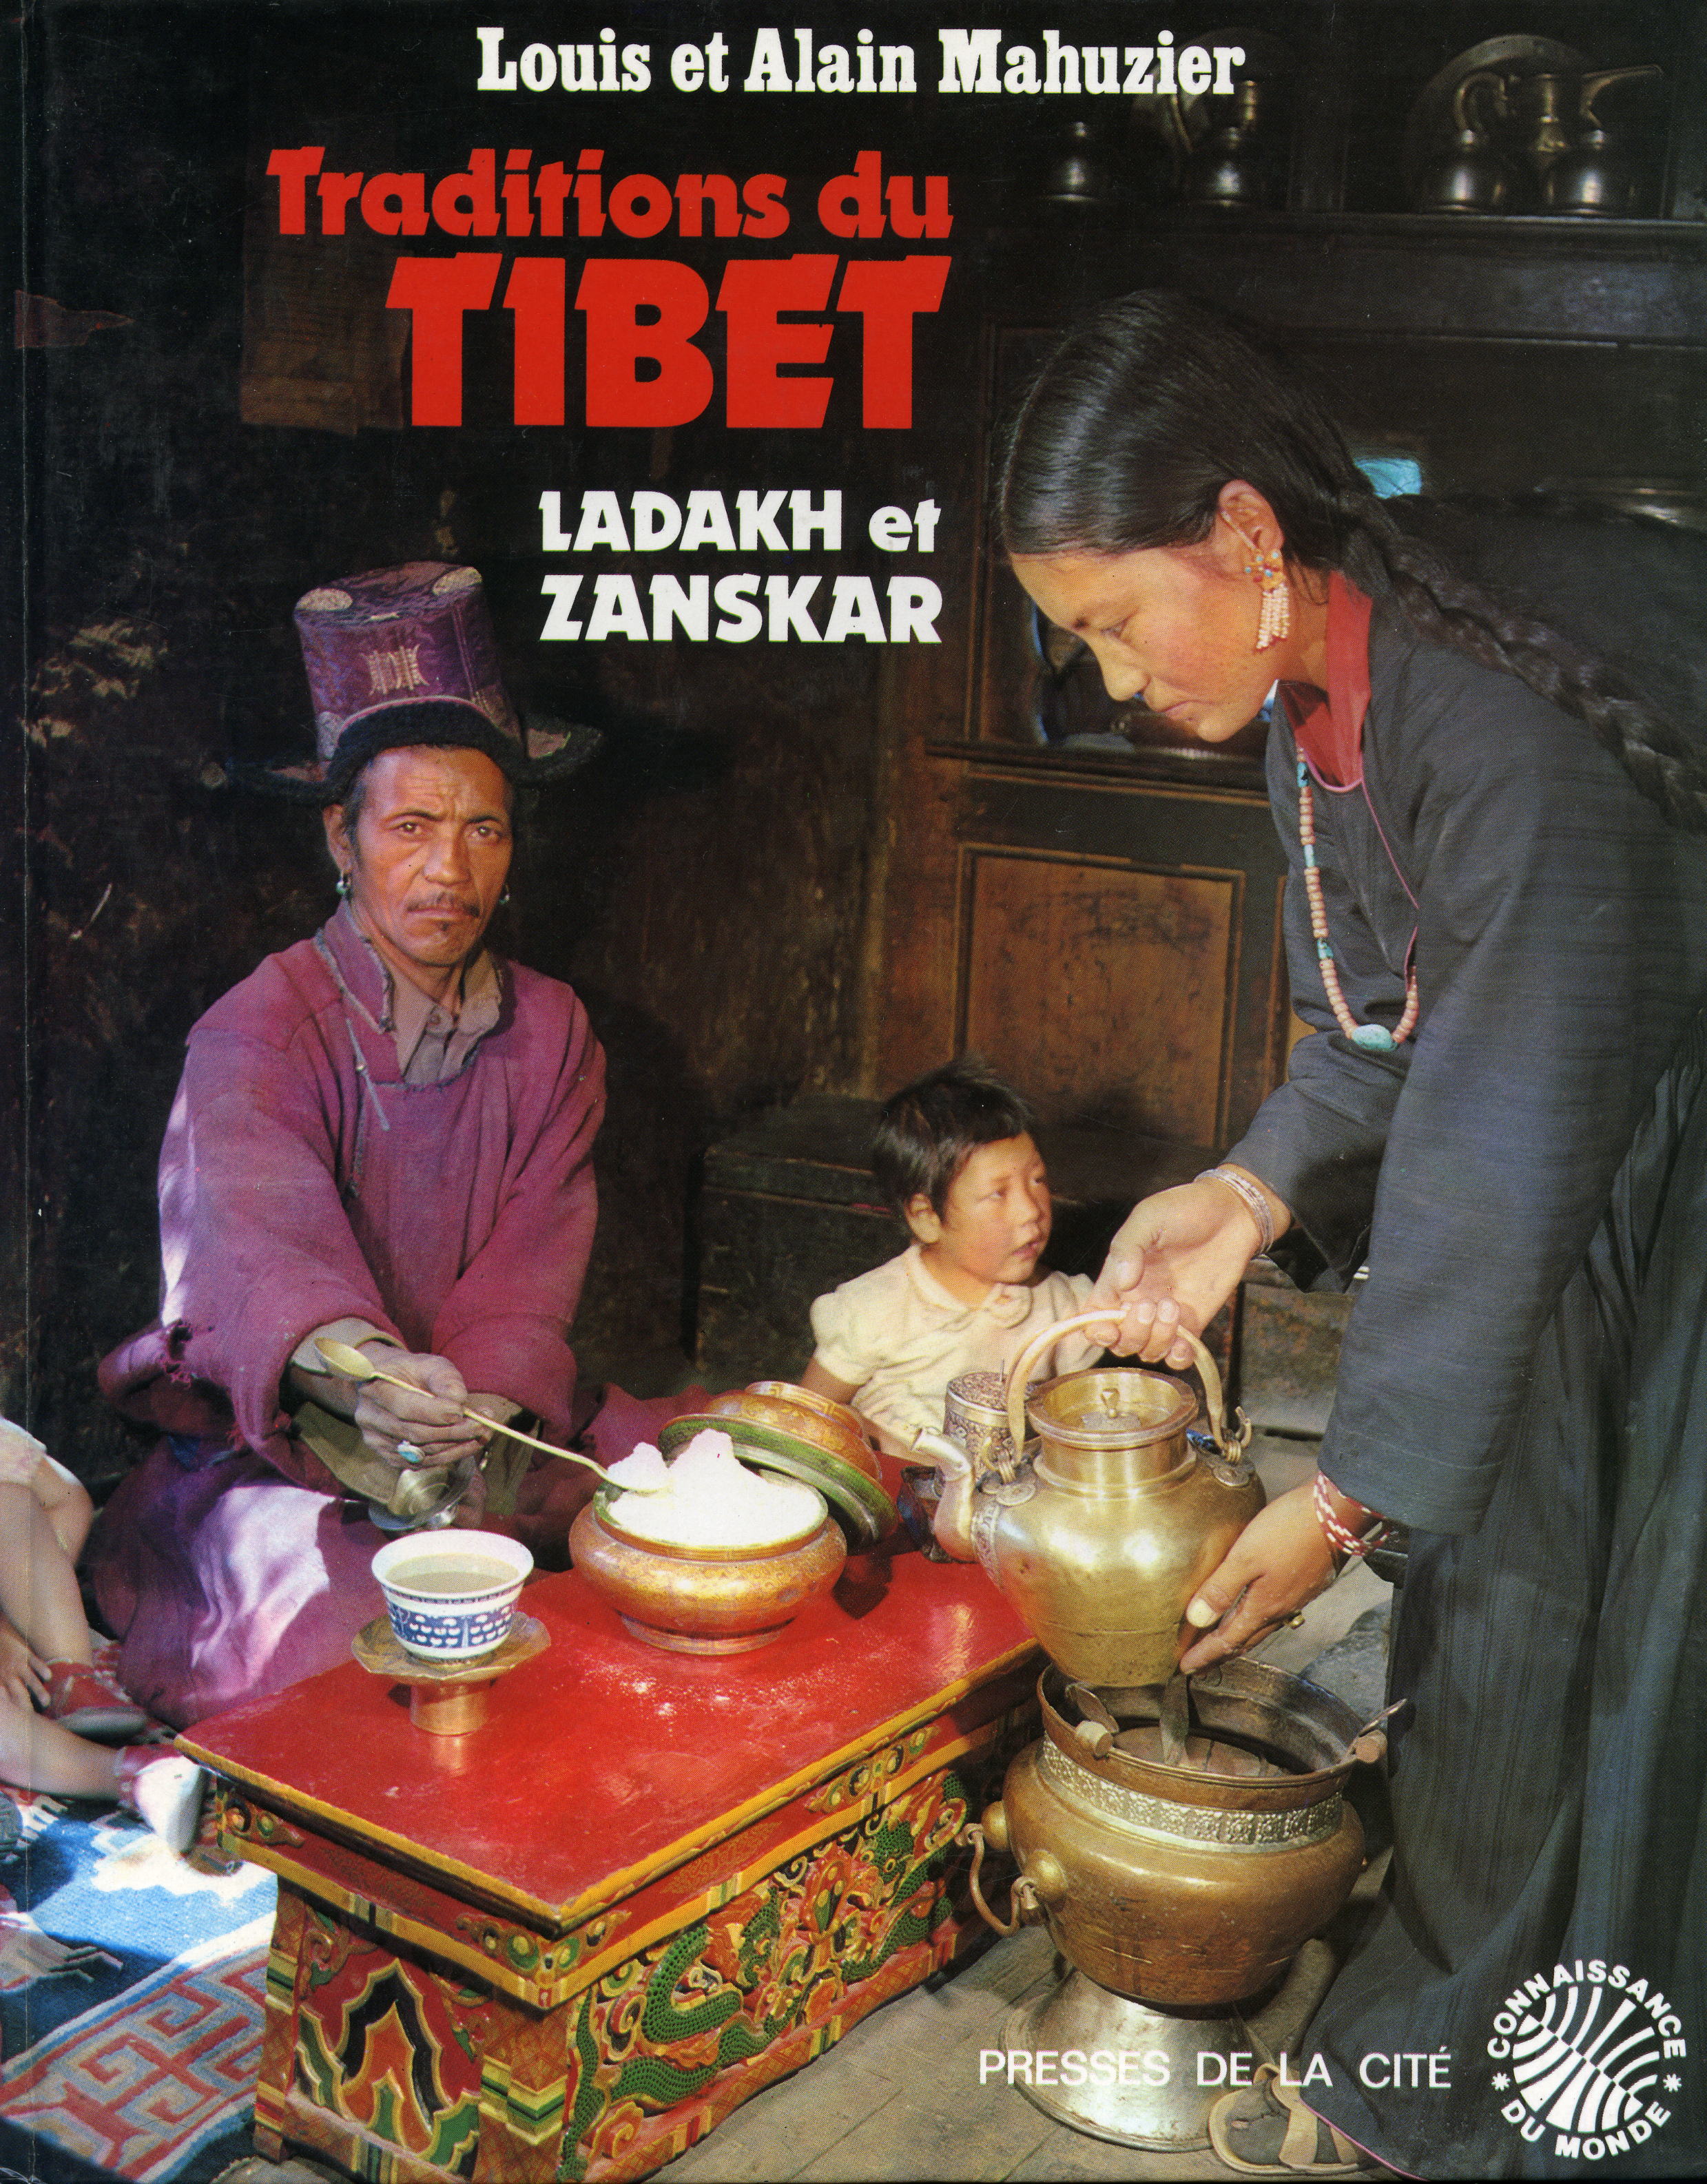 Tradition du Tibet